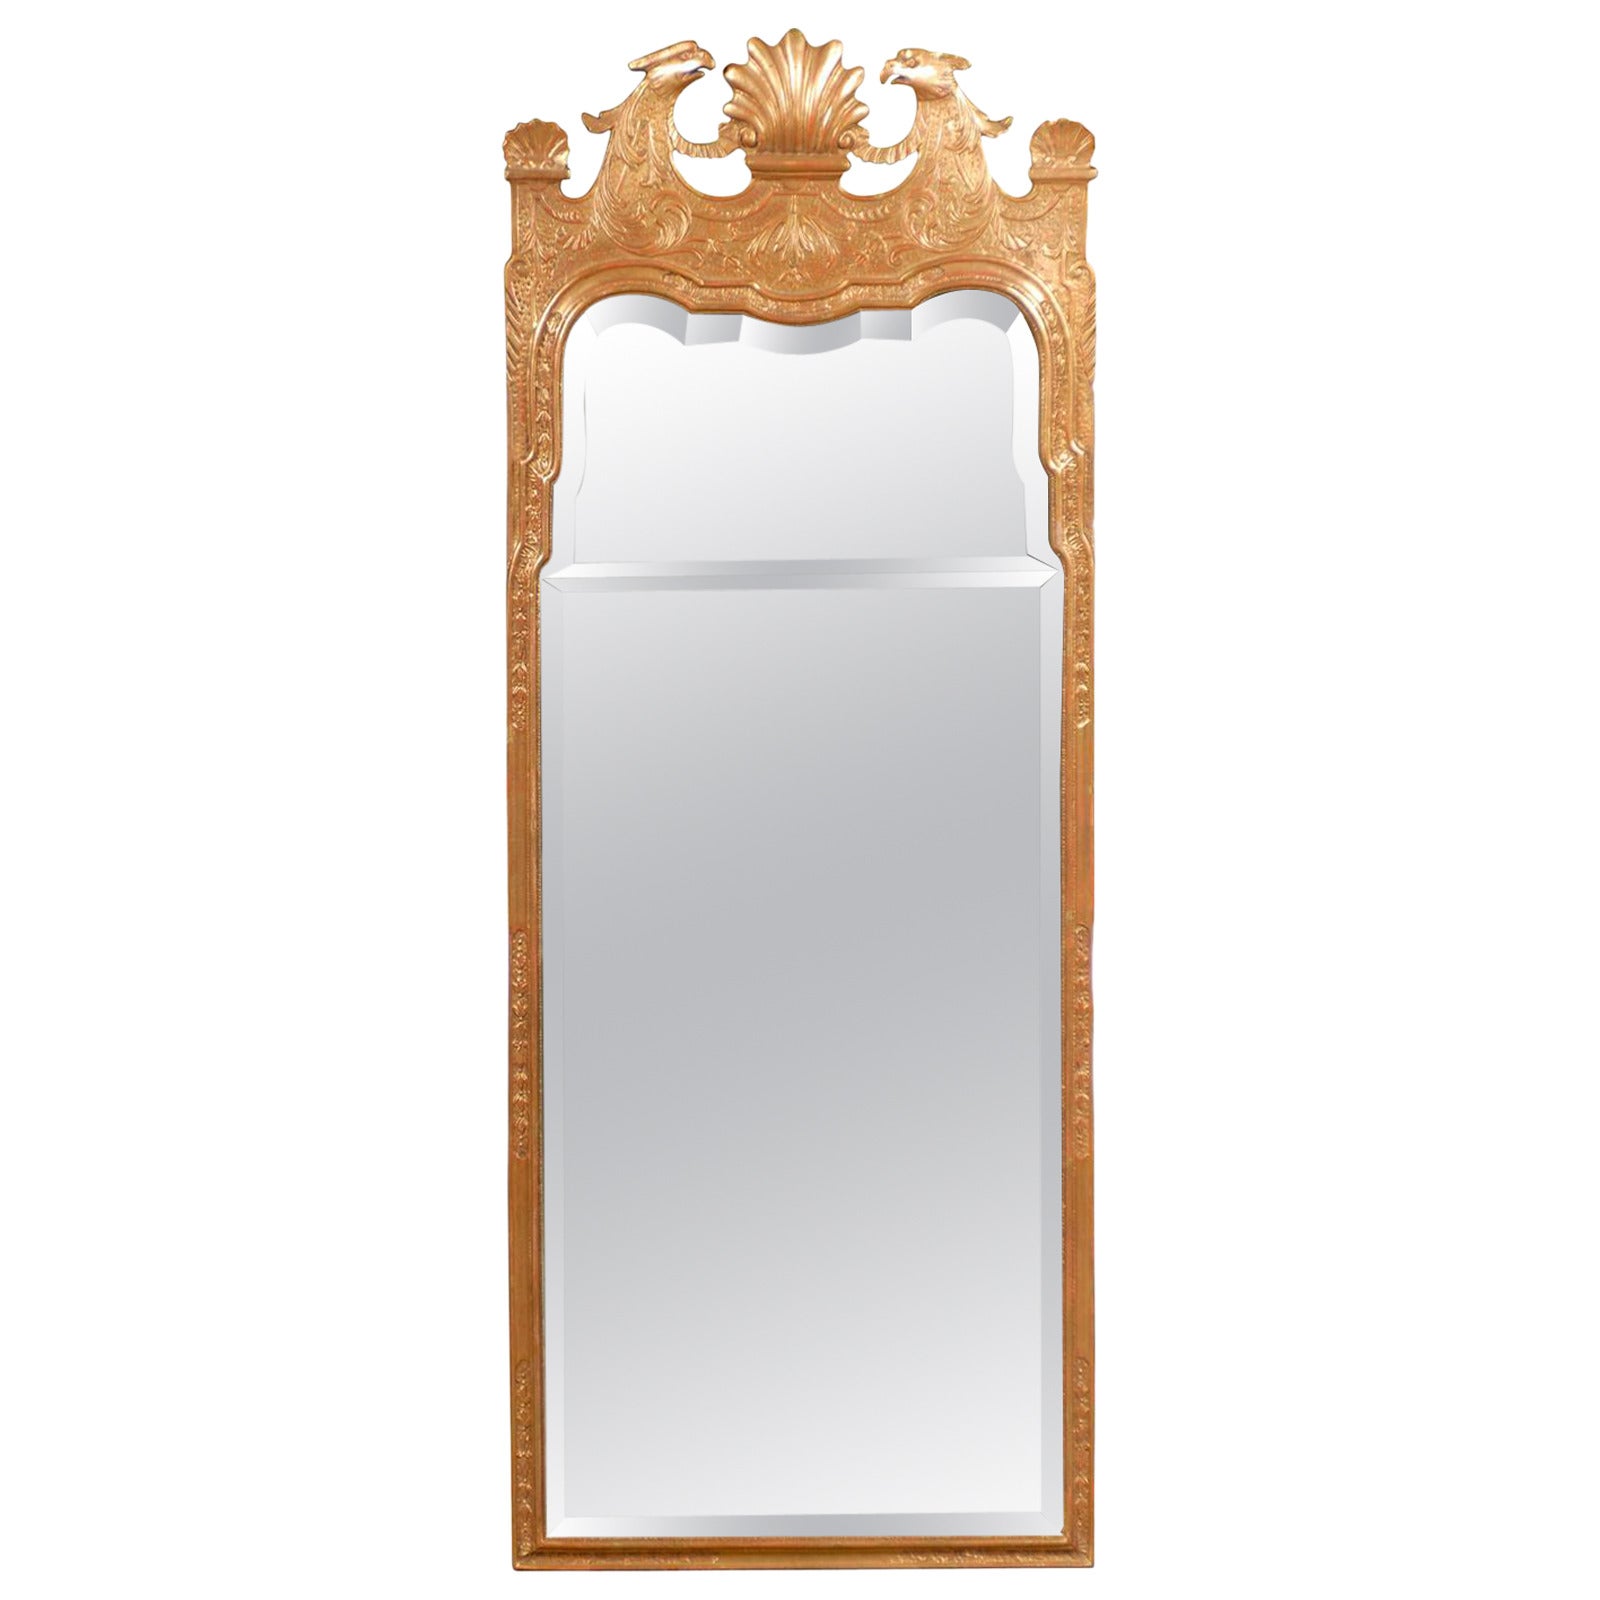 20th Century George III Style Gilt Mirror, Bird and Shell